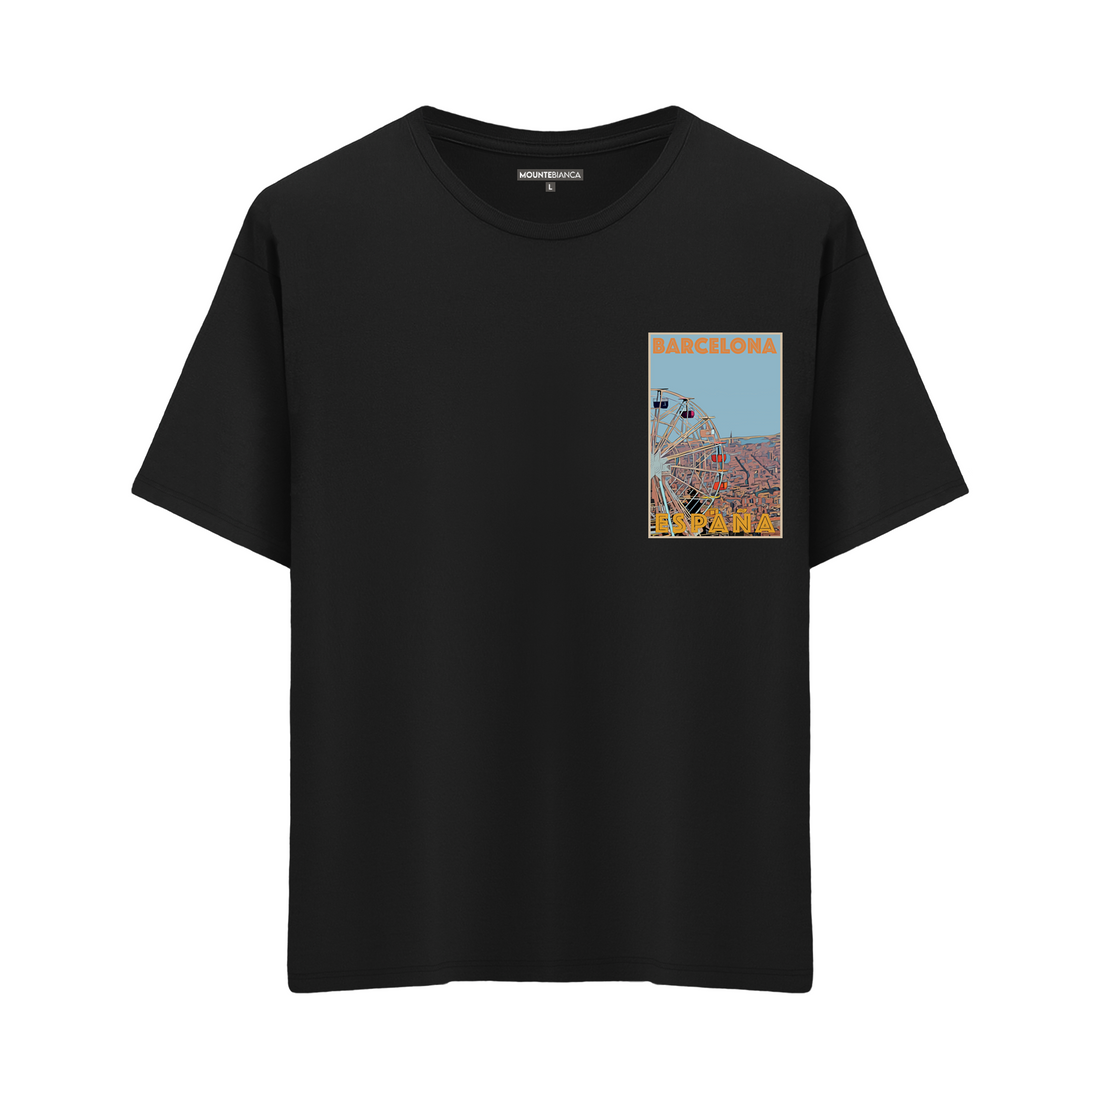 Barcelona - Oversize T-shirt